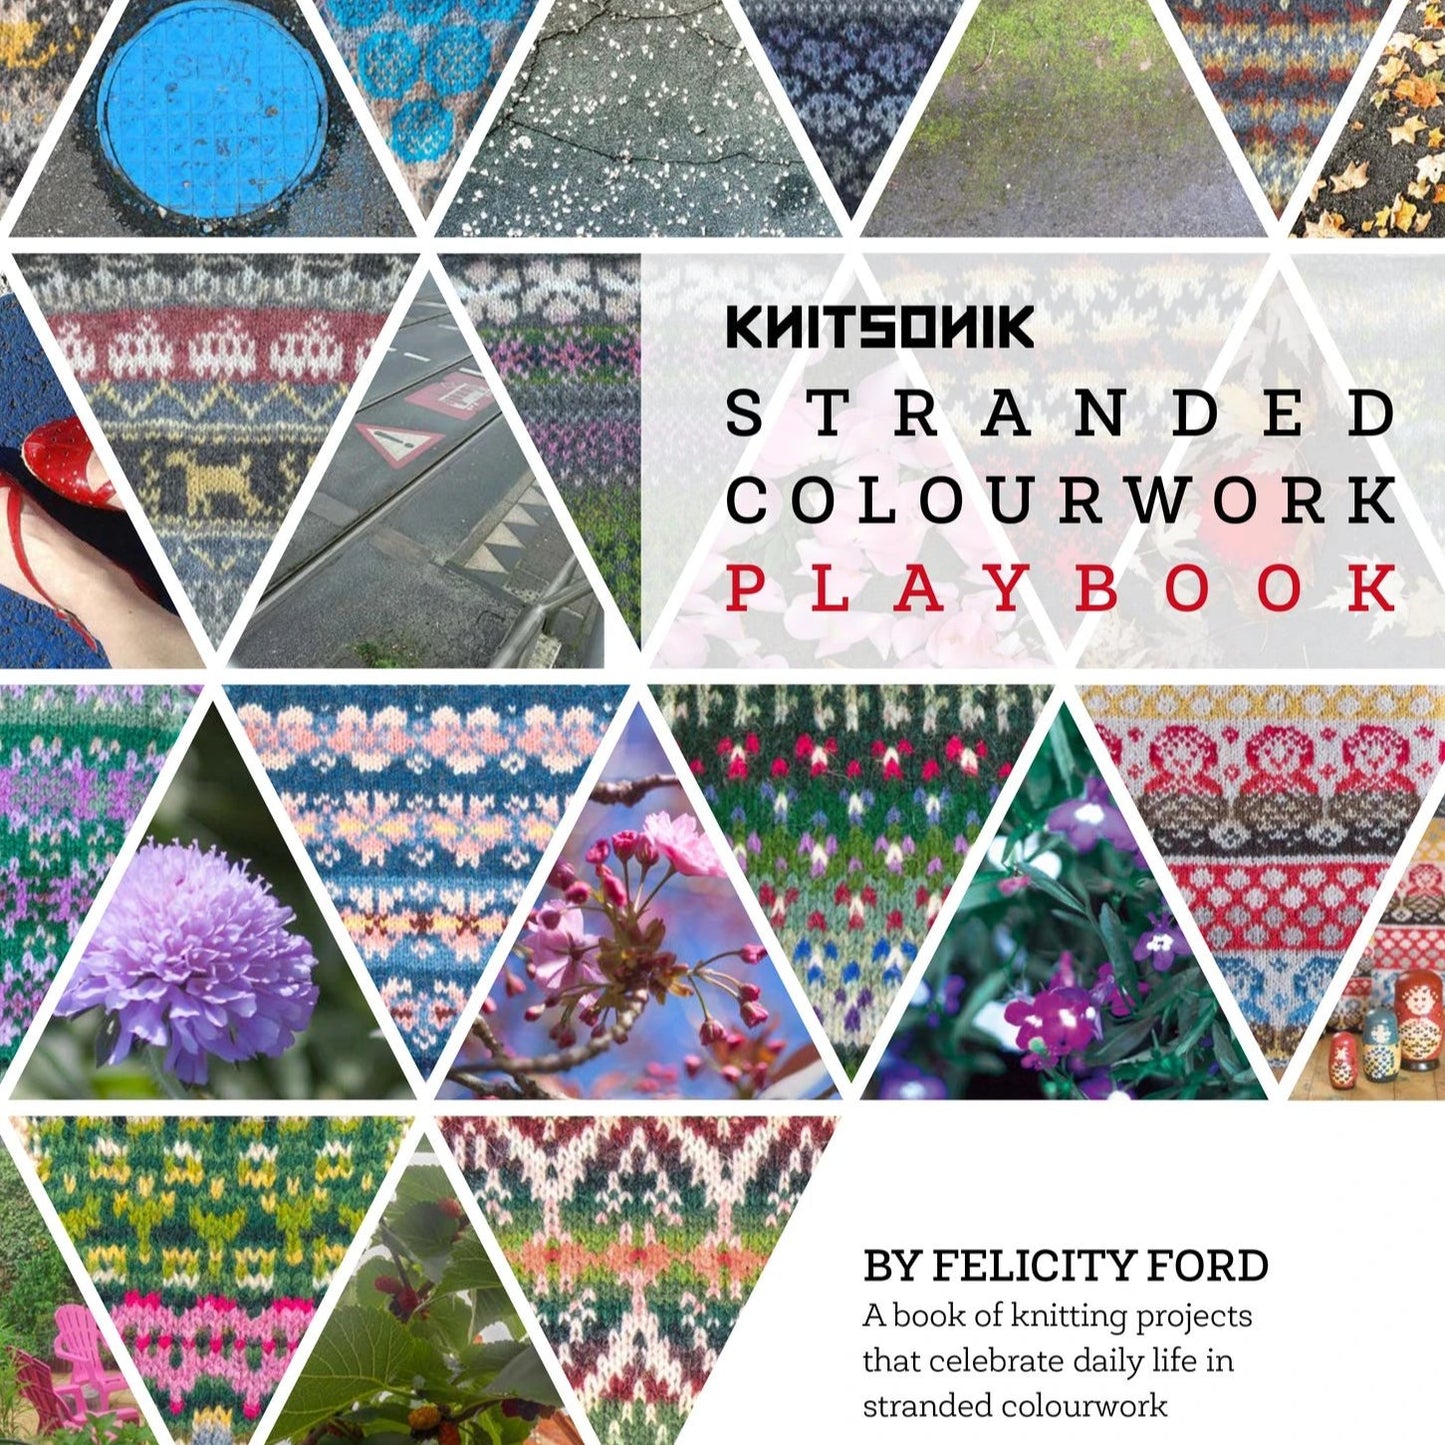 Knitsonik Stranded Colourwork Playbook